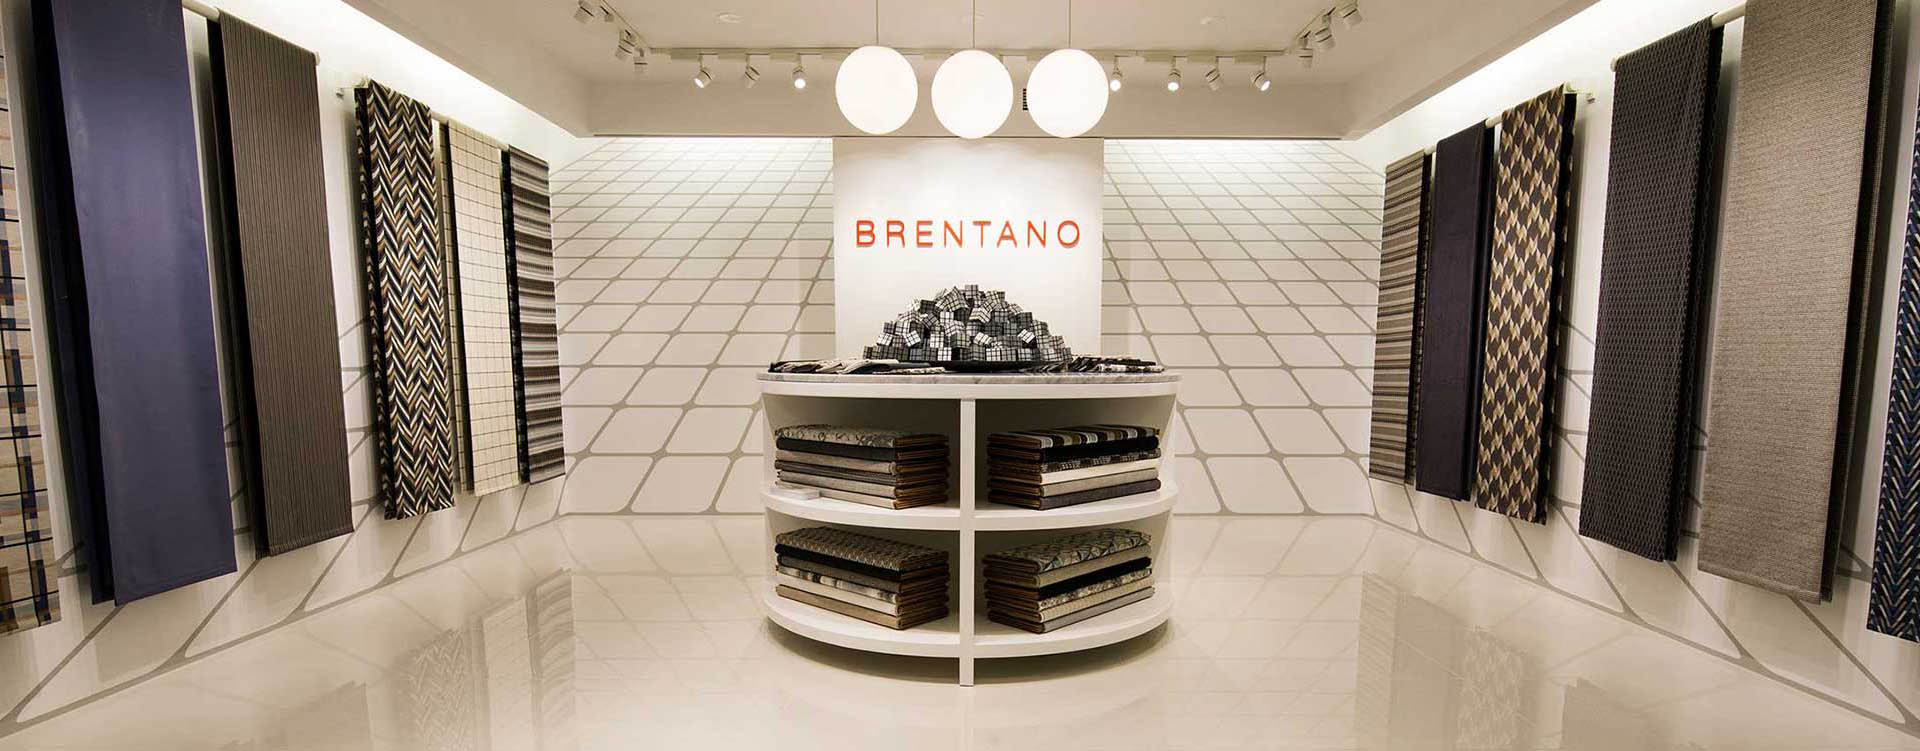 Brentano Showroom